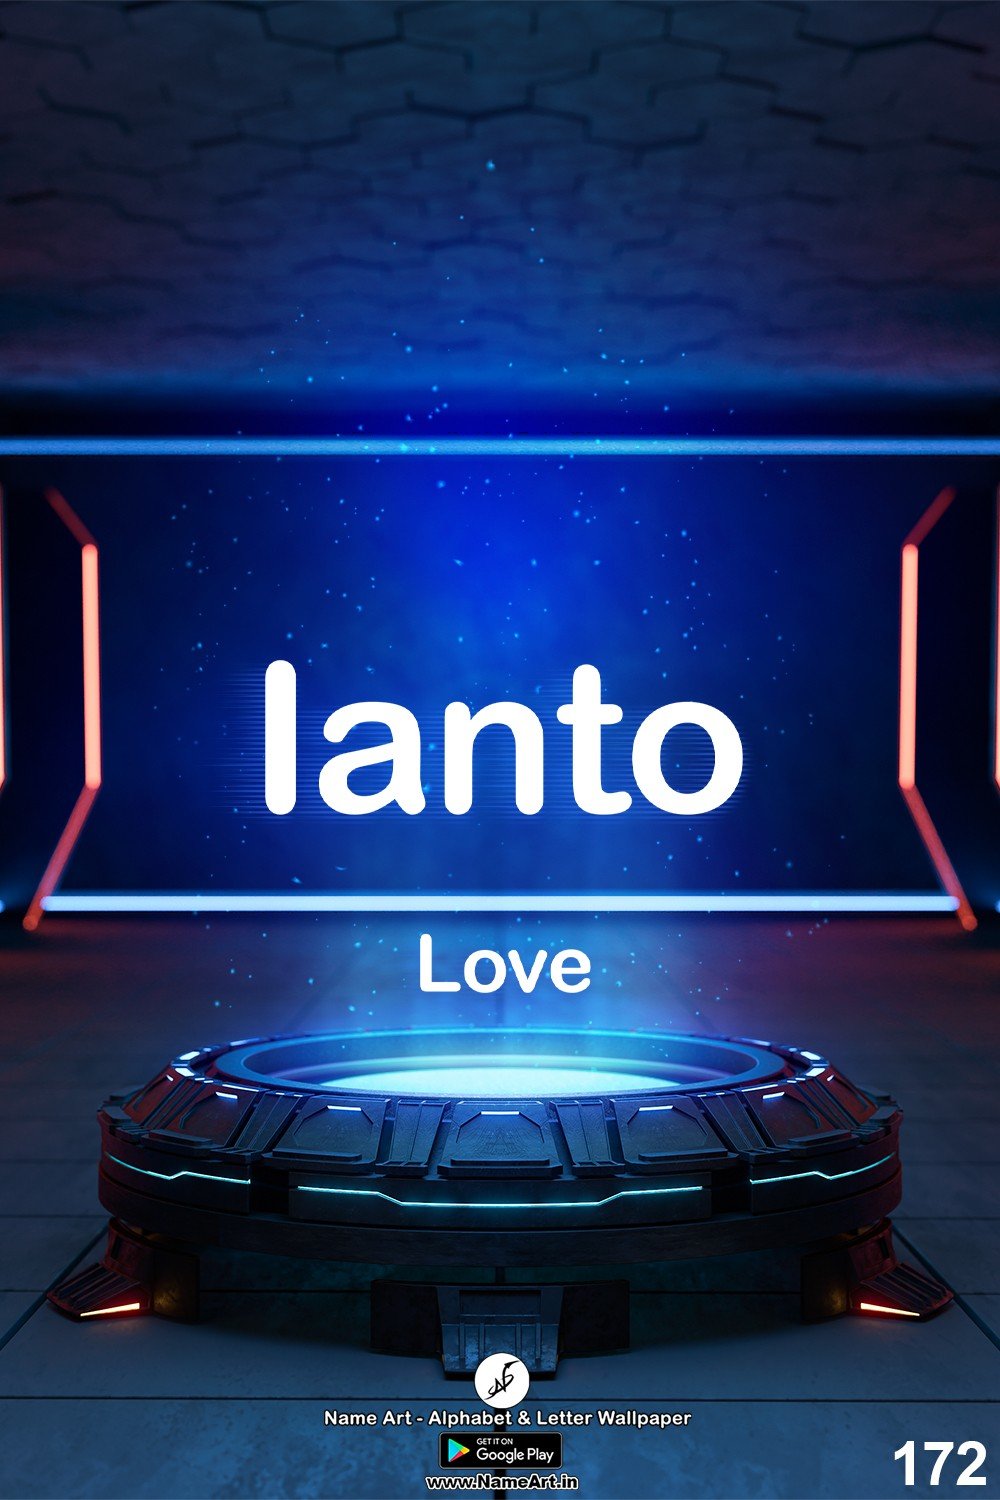 Ianto | Whatsapp Status Ianto | Happy Birthday Ianto !! | New Whatsapp Status Ianto Images |